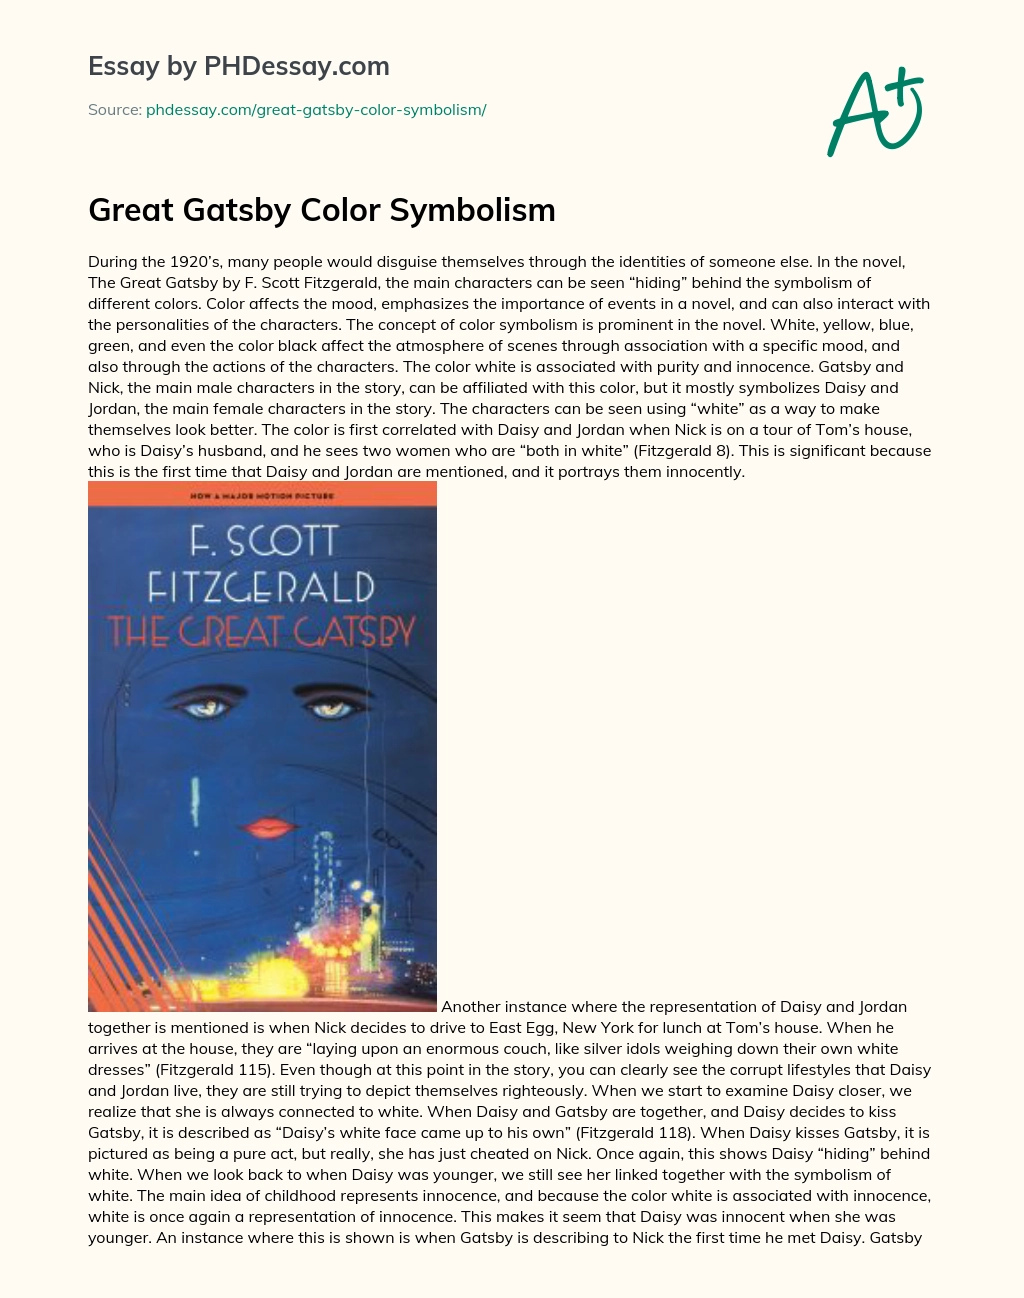 Great Gatsby Color Symbolism essay